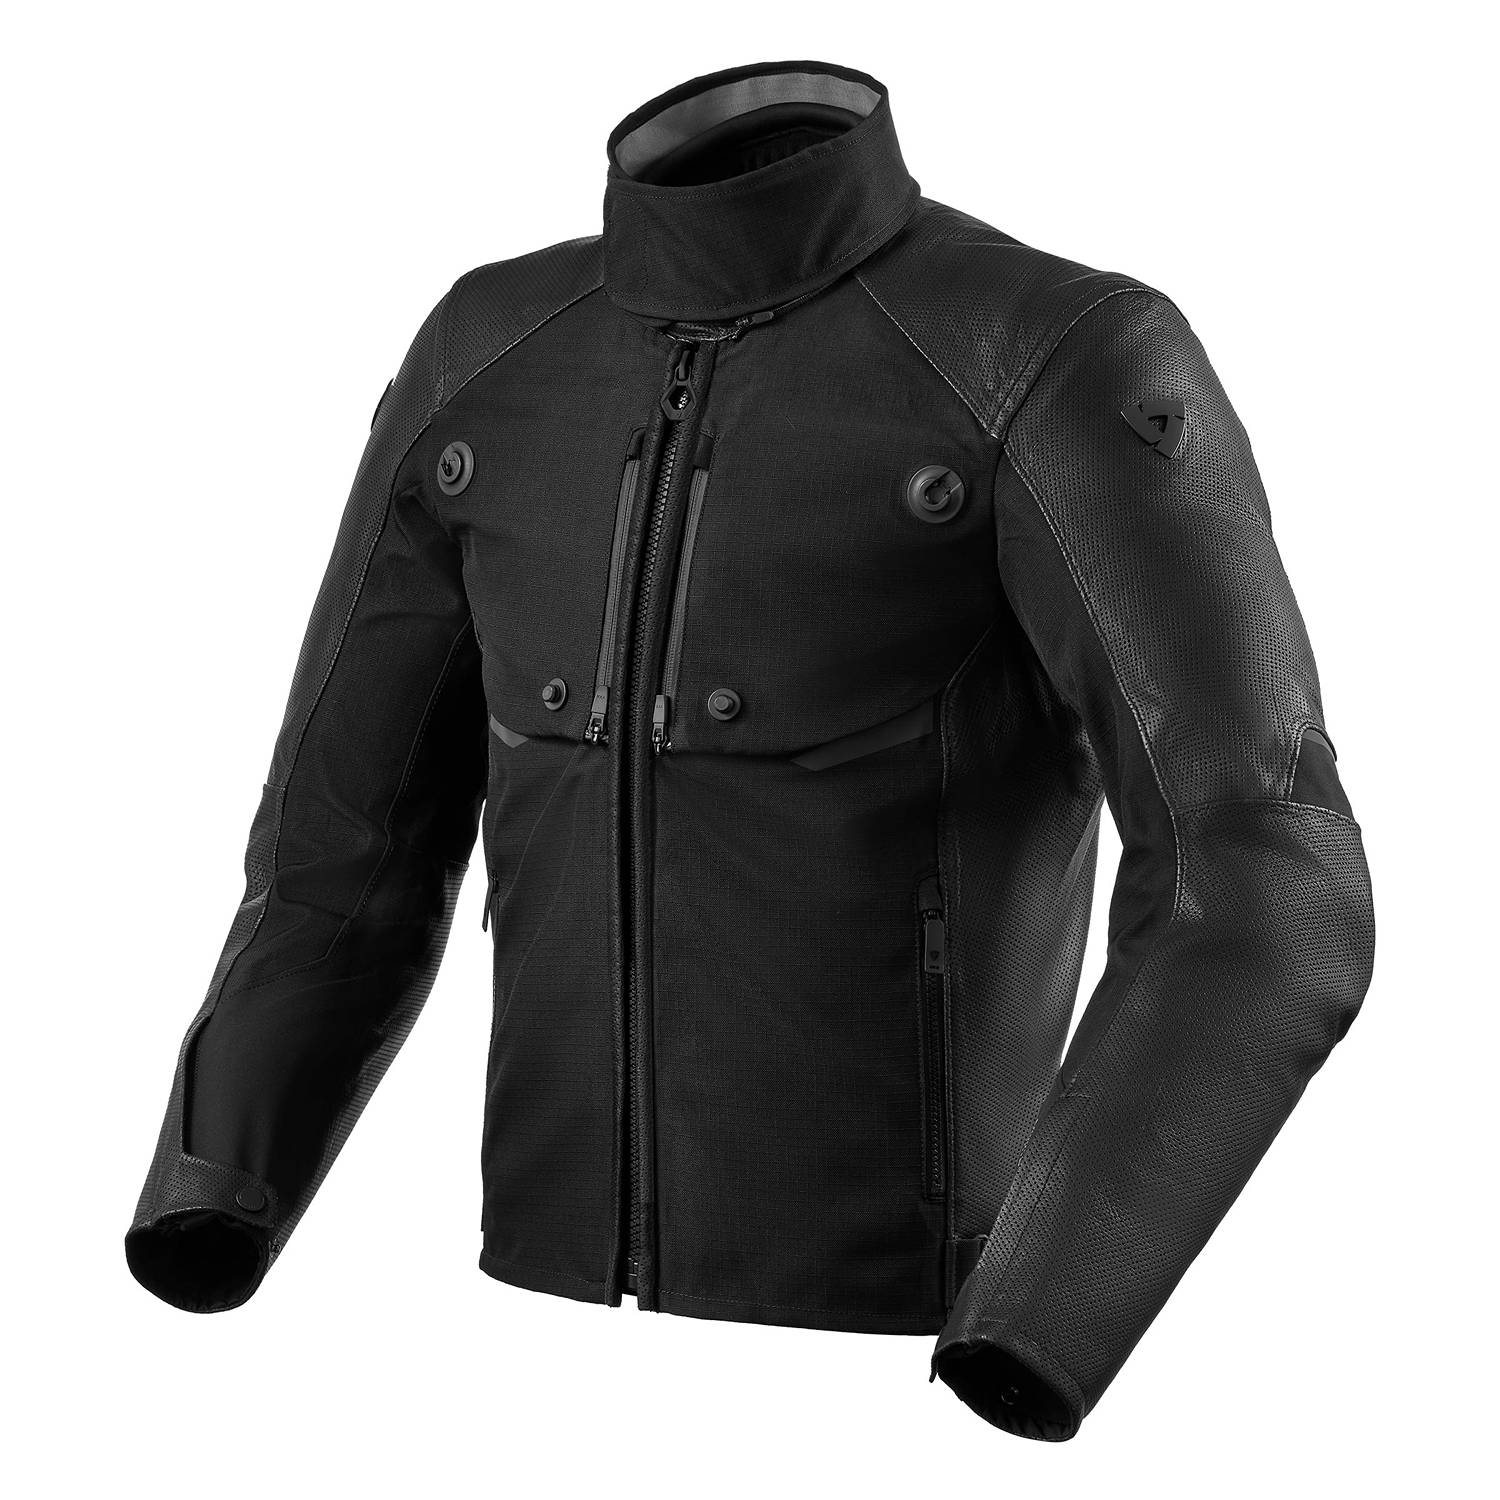 Image of REV'IT! Valve H2O Jacket Black Size 54 ID 8700001310680